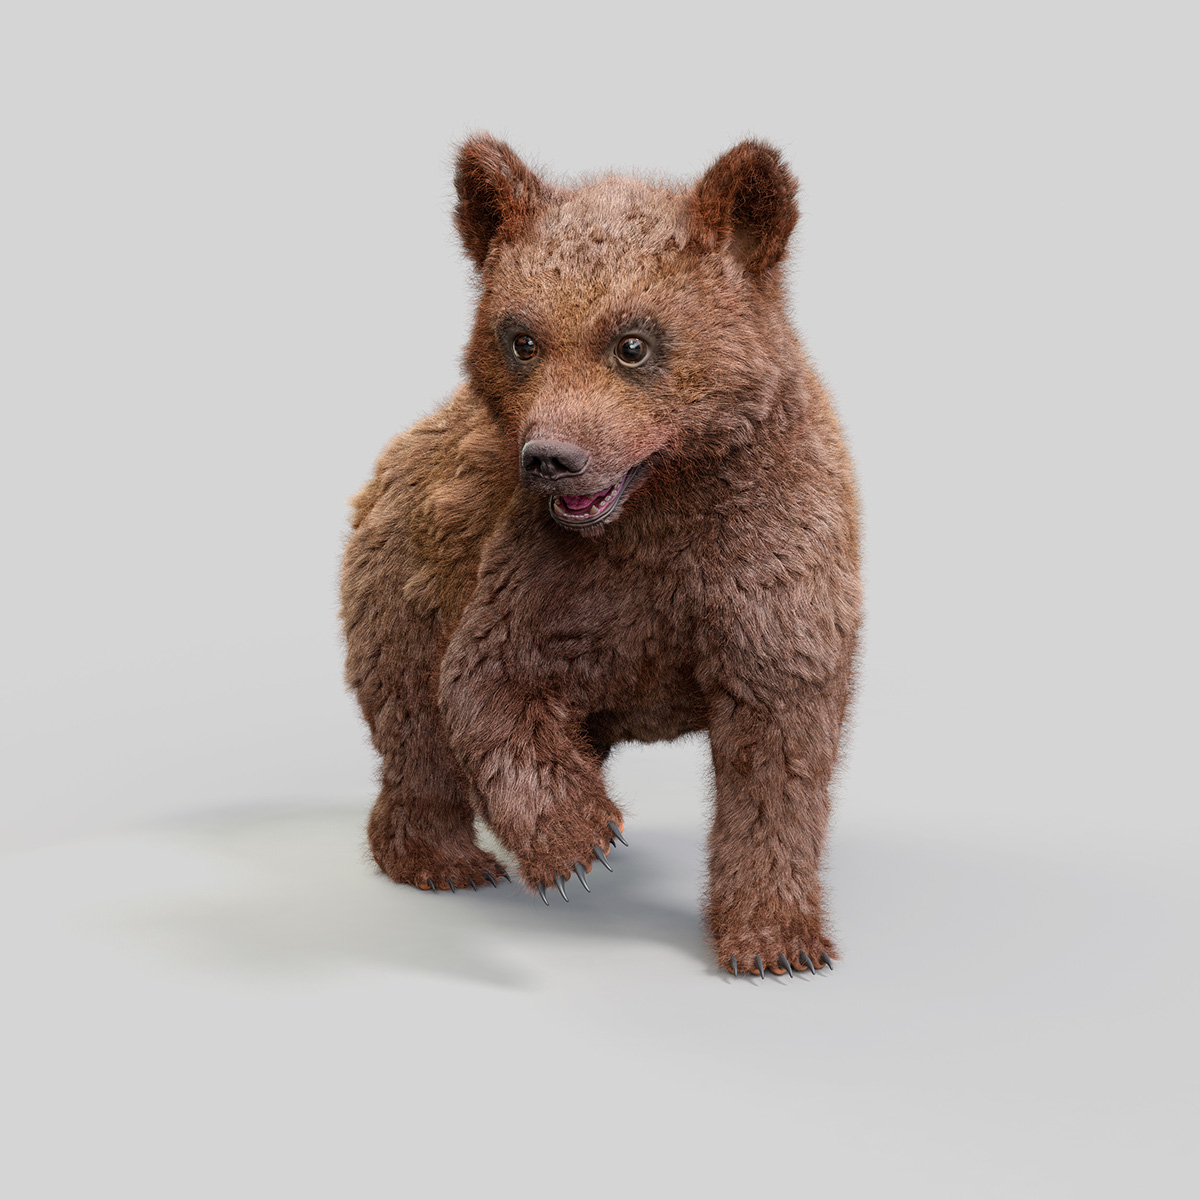 bear urso cub grizzly Zbrush modo 3D CGI Fur animal baby